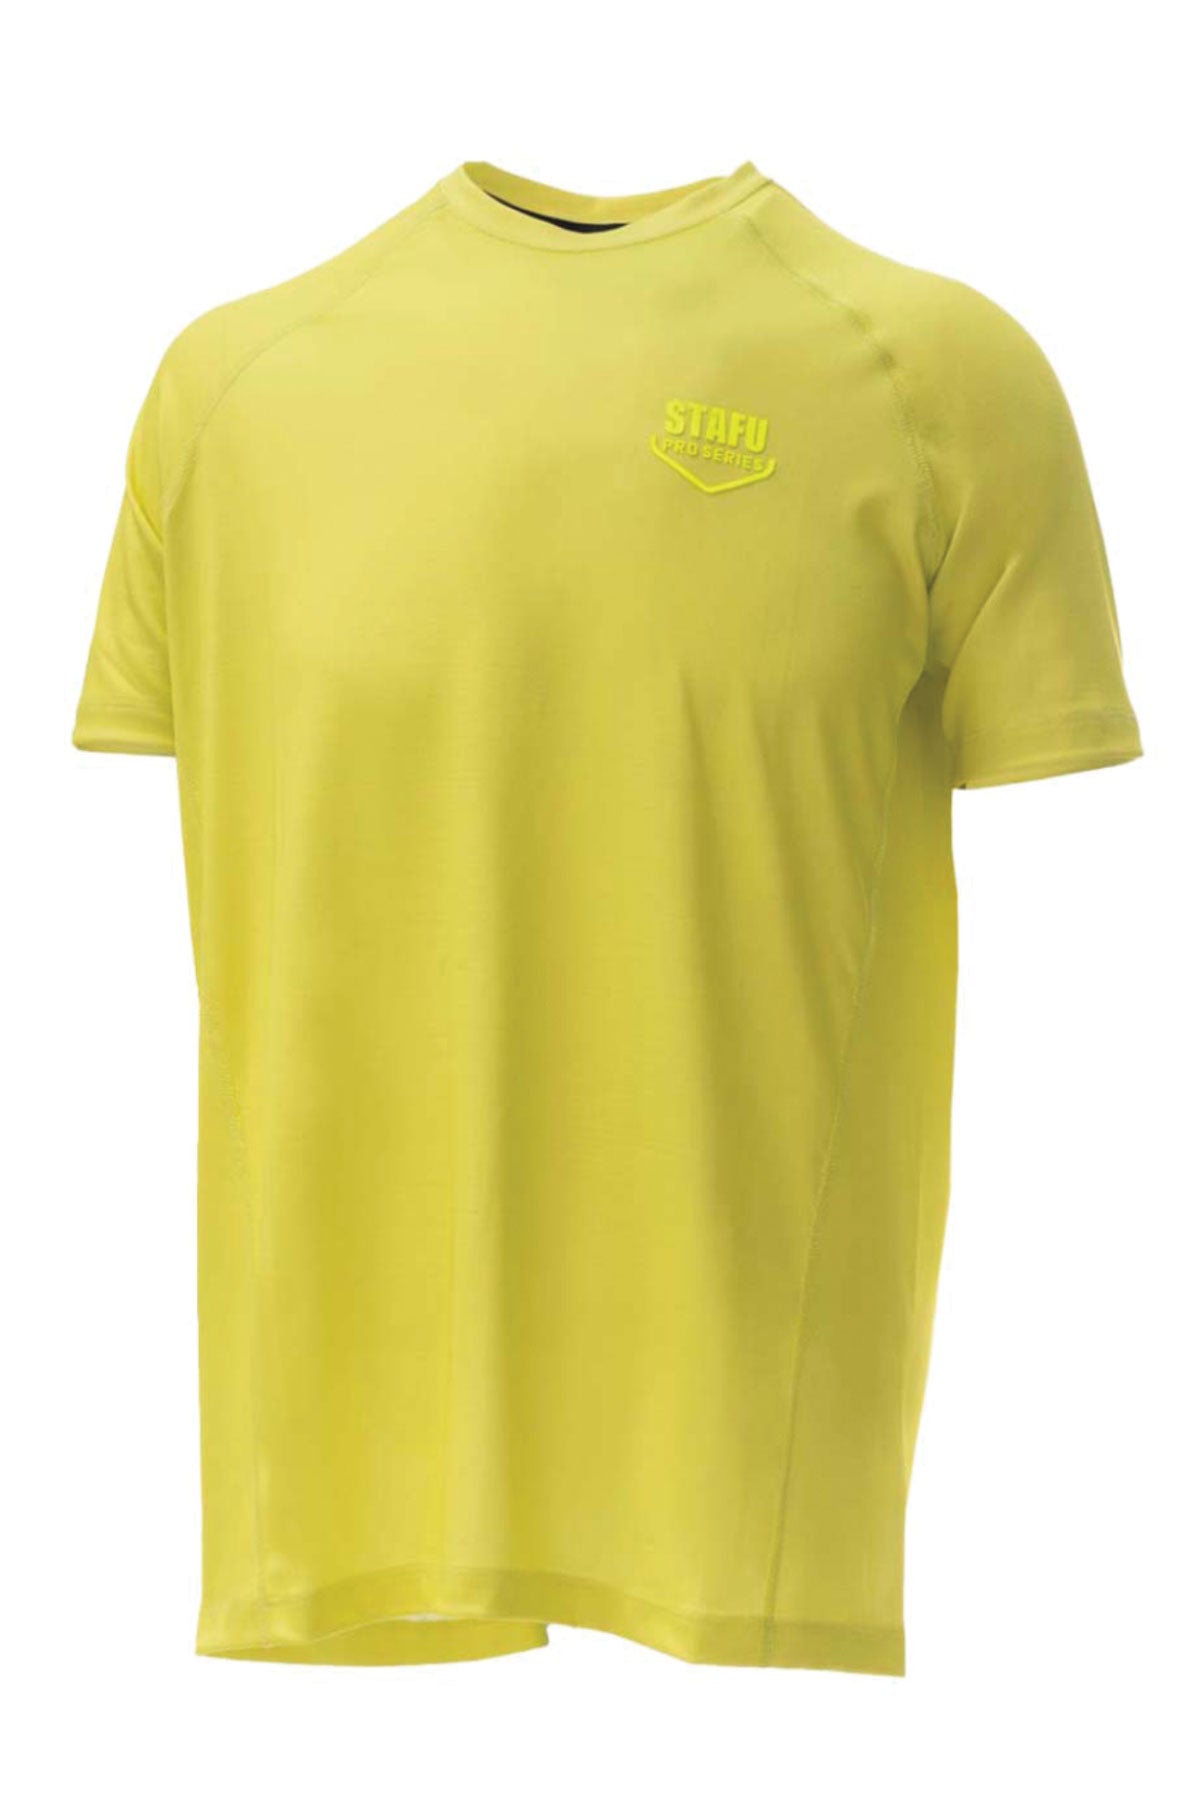 Vamos Short Sleeve Fishing Shirt - Trophy - Lime - Stafu Pro Series